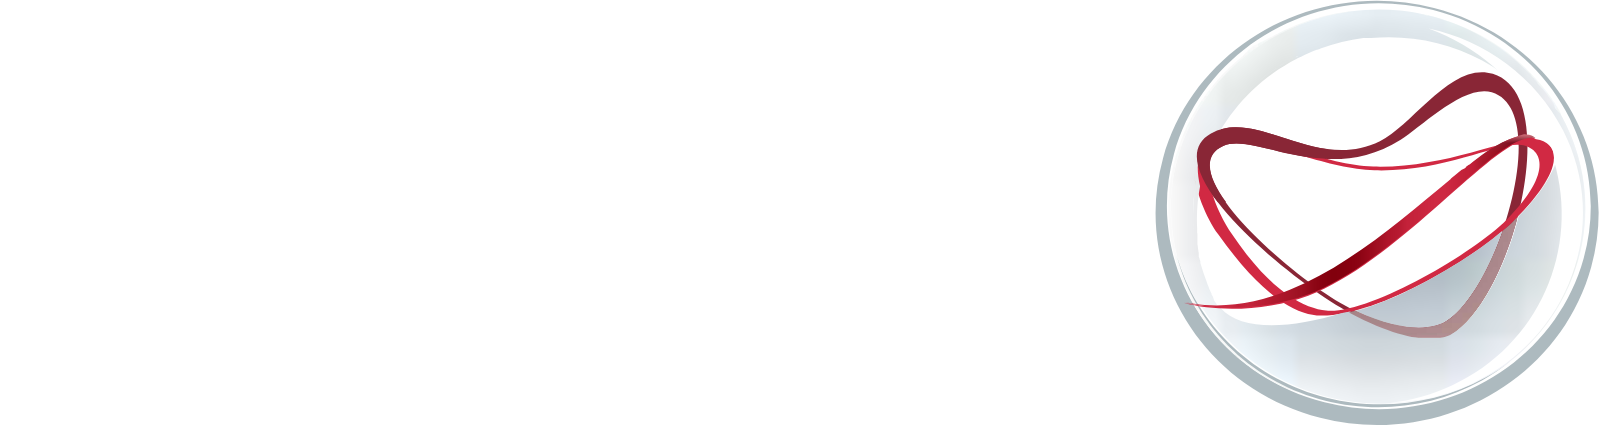 Anima Holding Logo groß für dunkle Hintergründe (transparentes PNG)